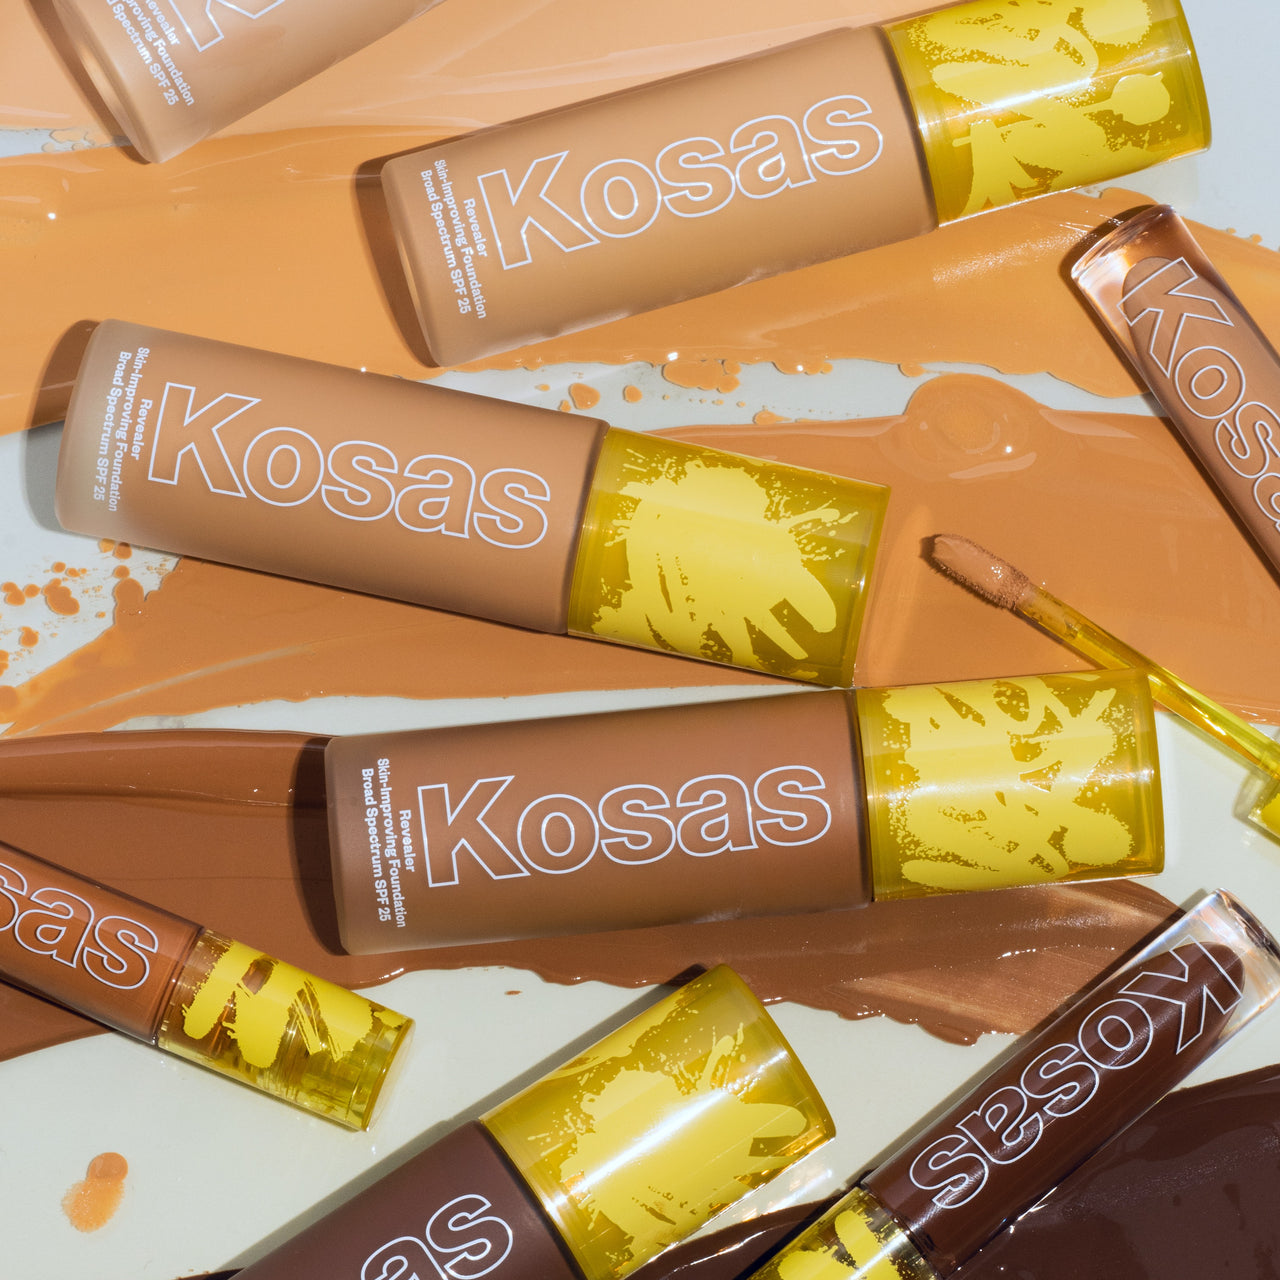 Kosas foundation in various shades